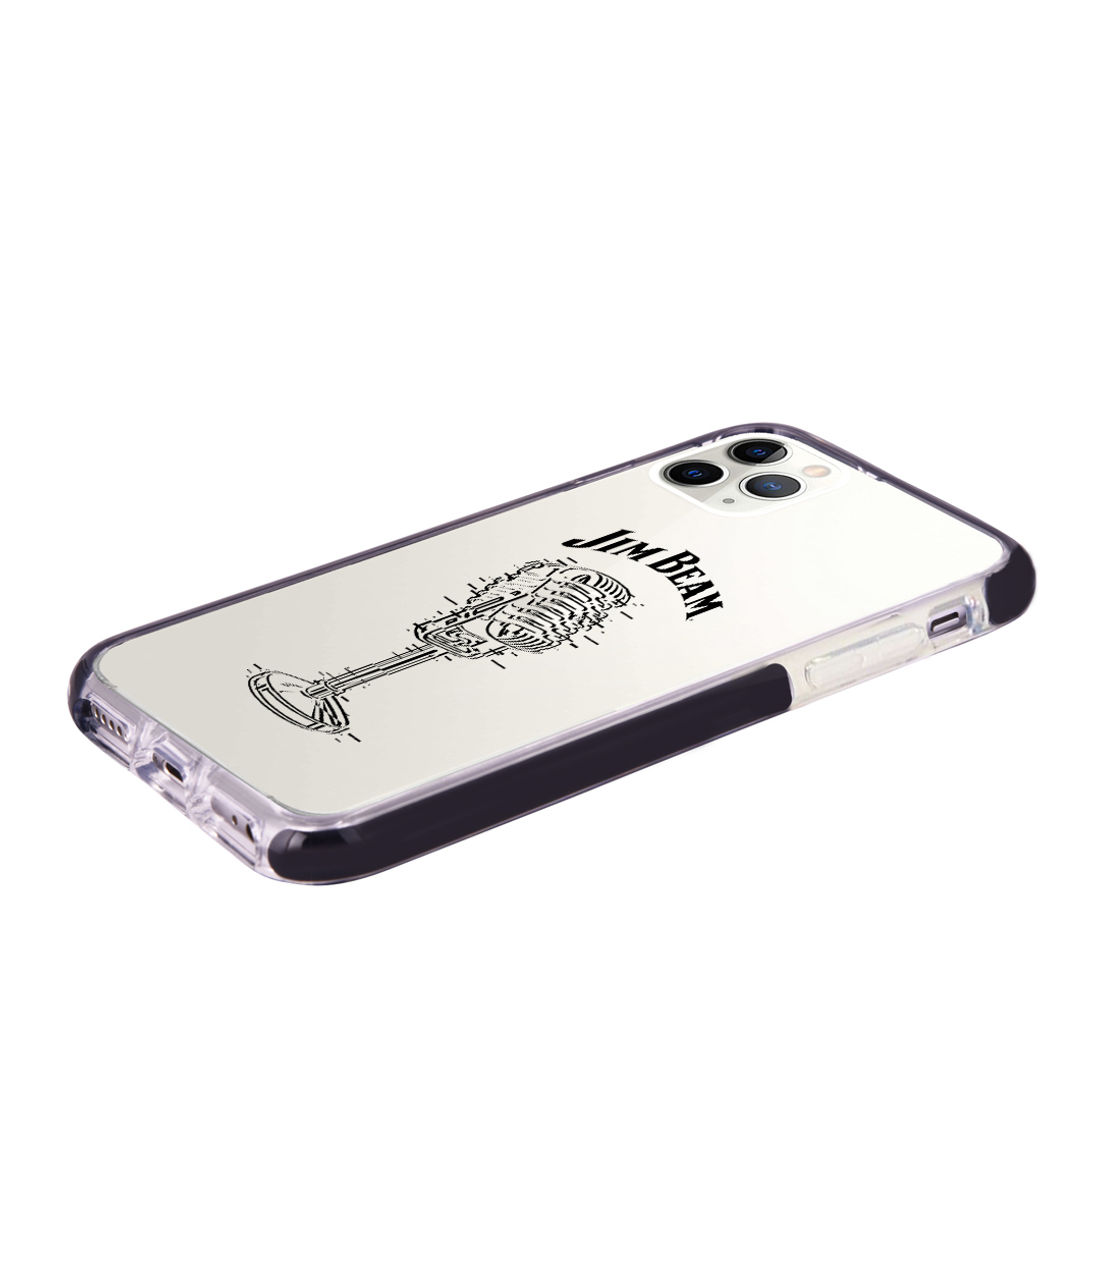 Jim Beam Retro Mic - Shield Case for iPhone 11 Pro